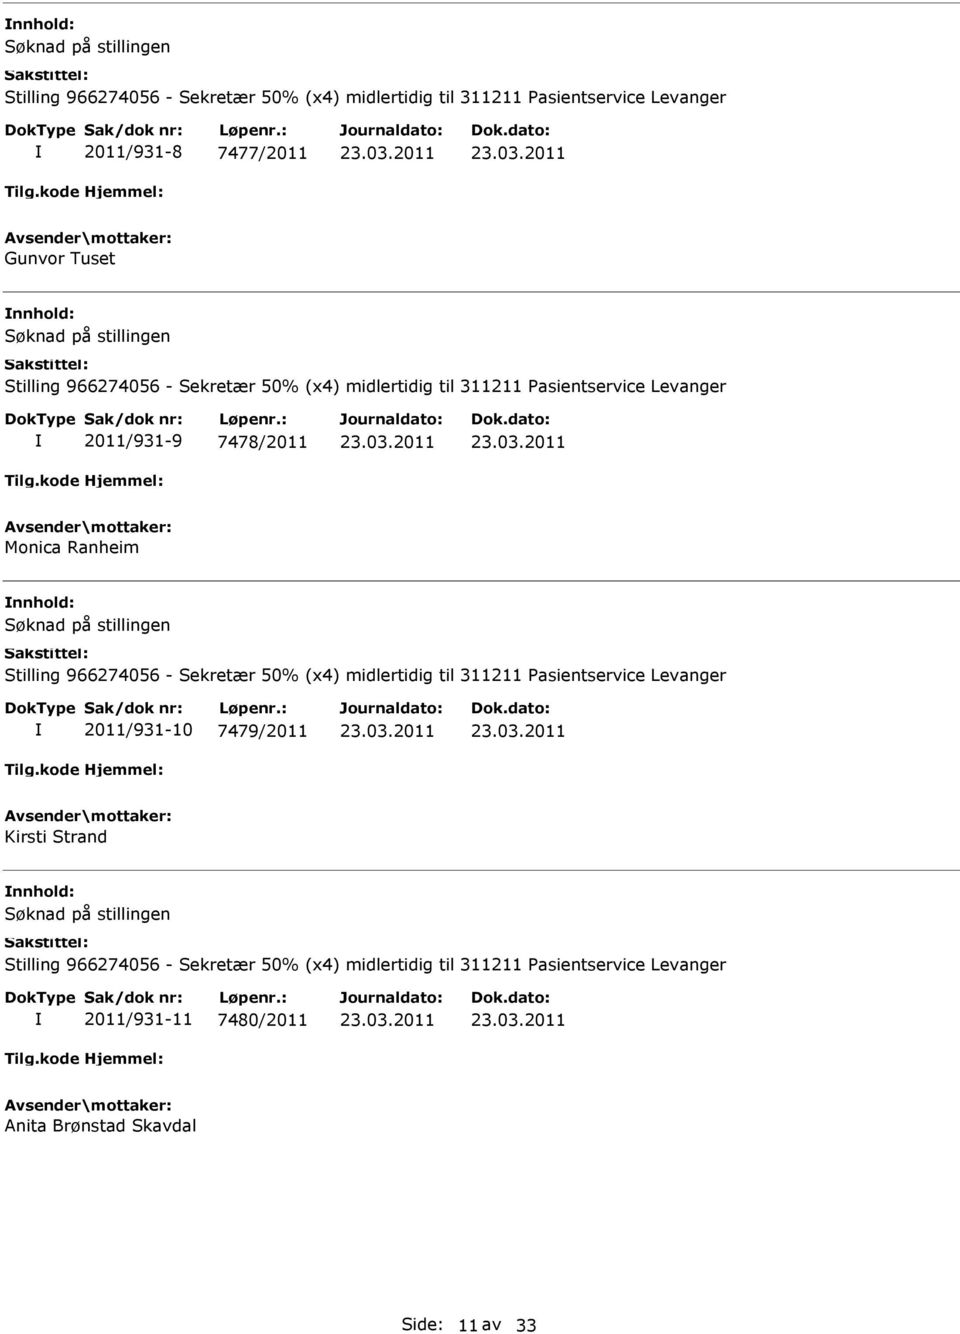 Stilling 966274056 - Sekretær 50% (x4) midlertidig til 311211 Pasientservice Levanger 2011/931-10 7479/2011 Kirsti Strand